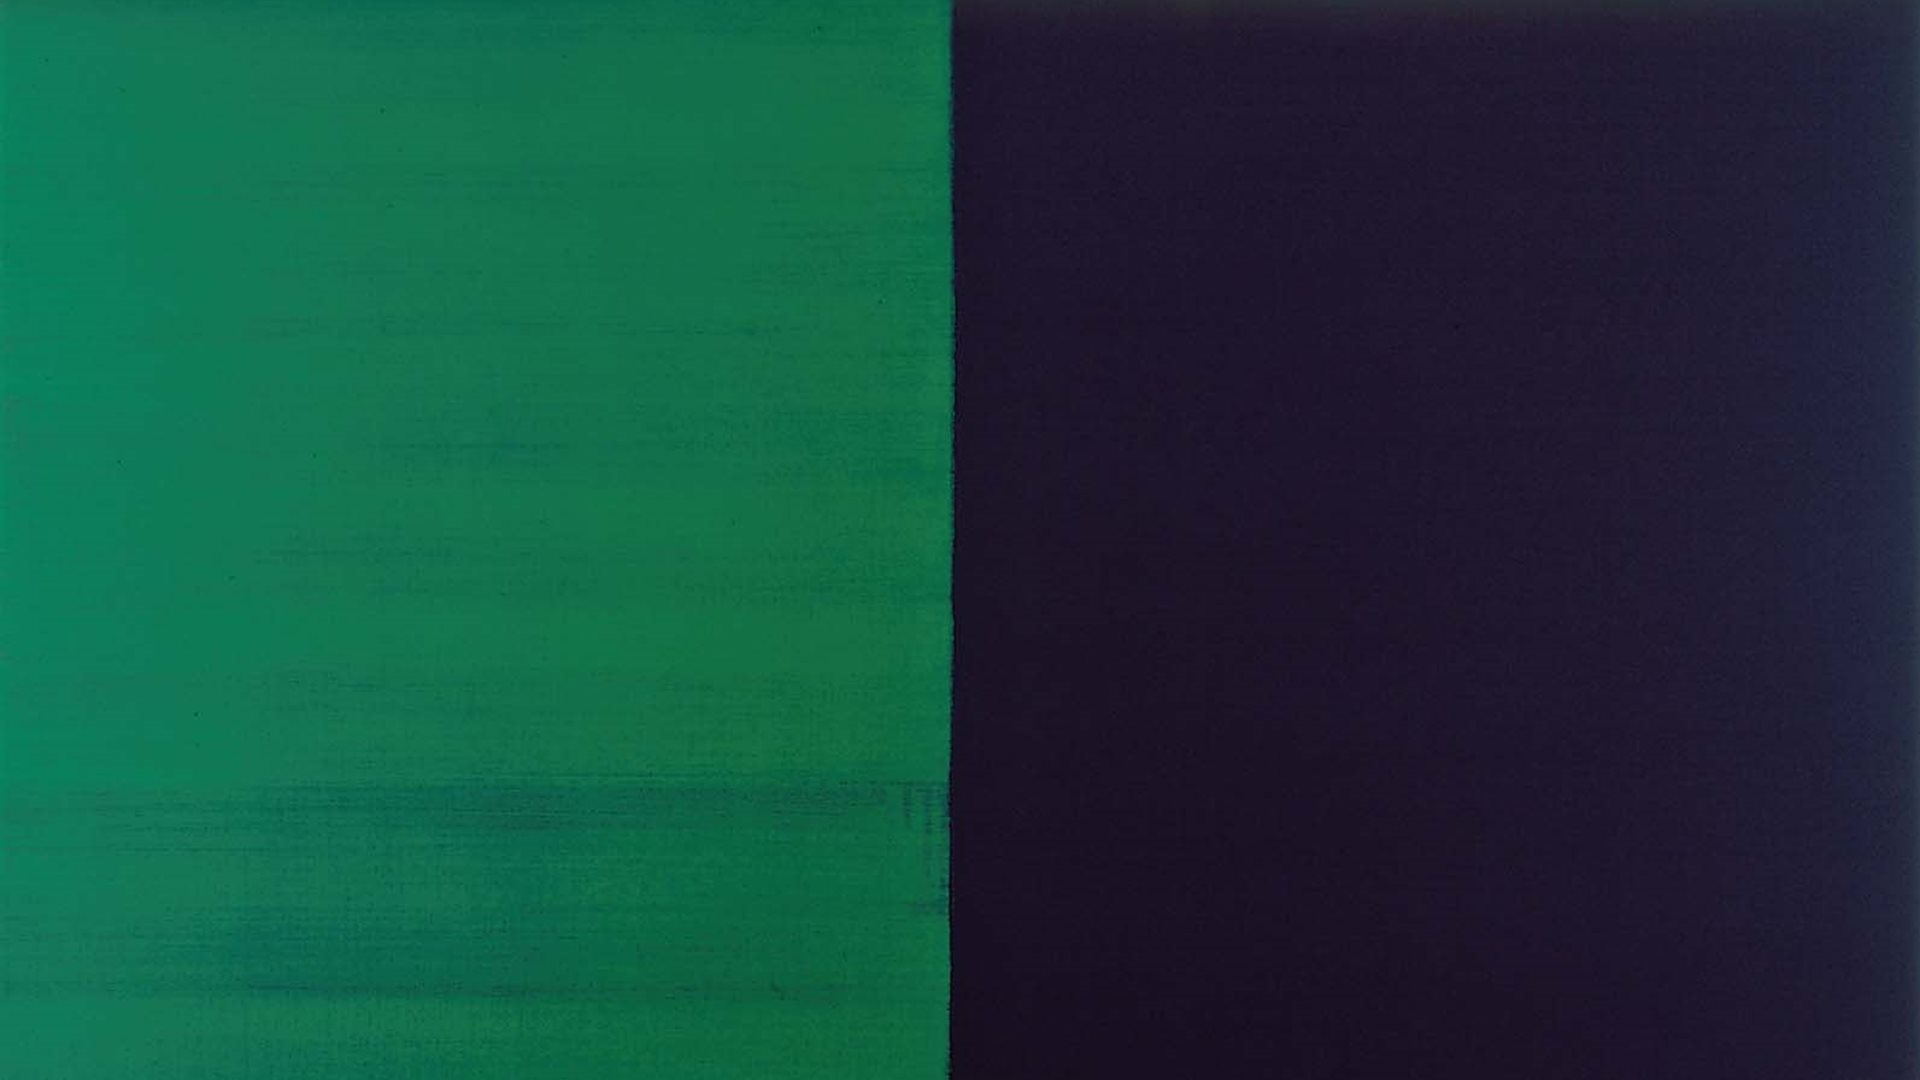 Exposed Painting (Veronese Green), 2005